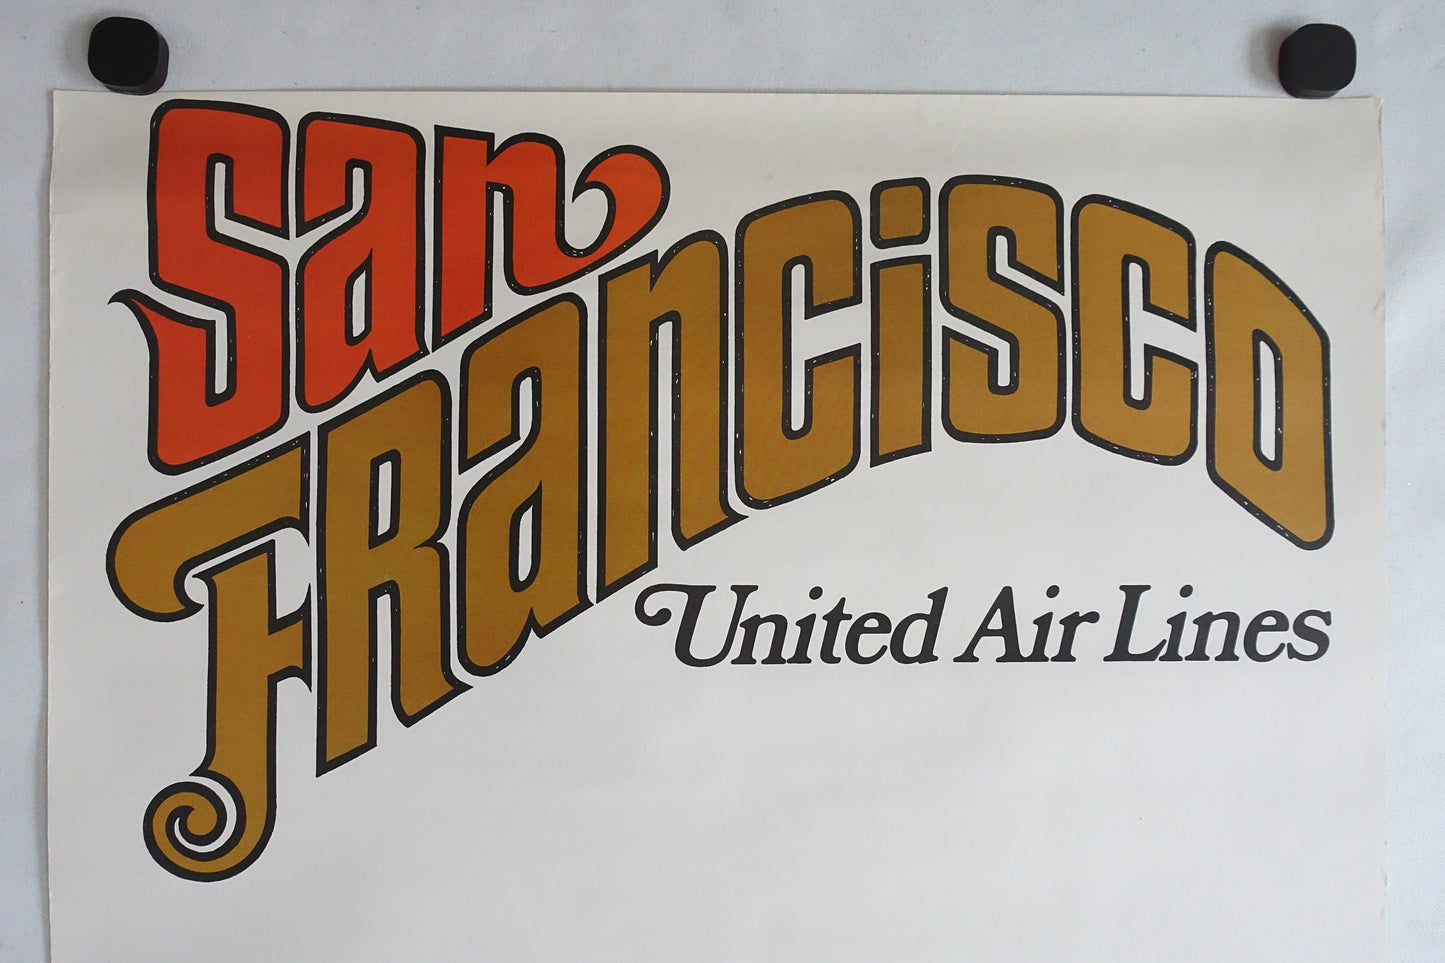 1967 San Francisco United Airlines by James Jebavy - Original Vintage Poster